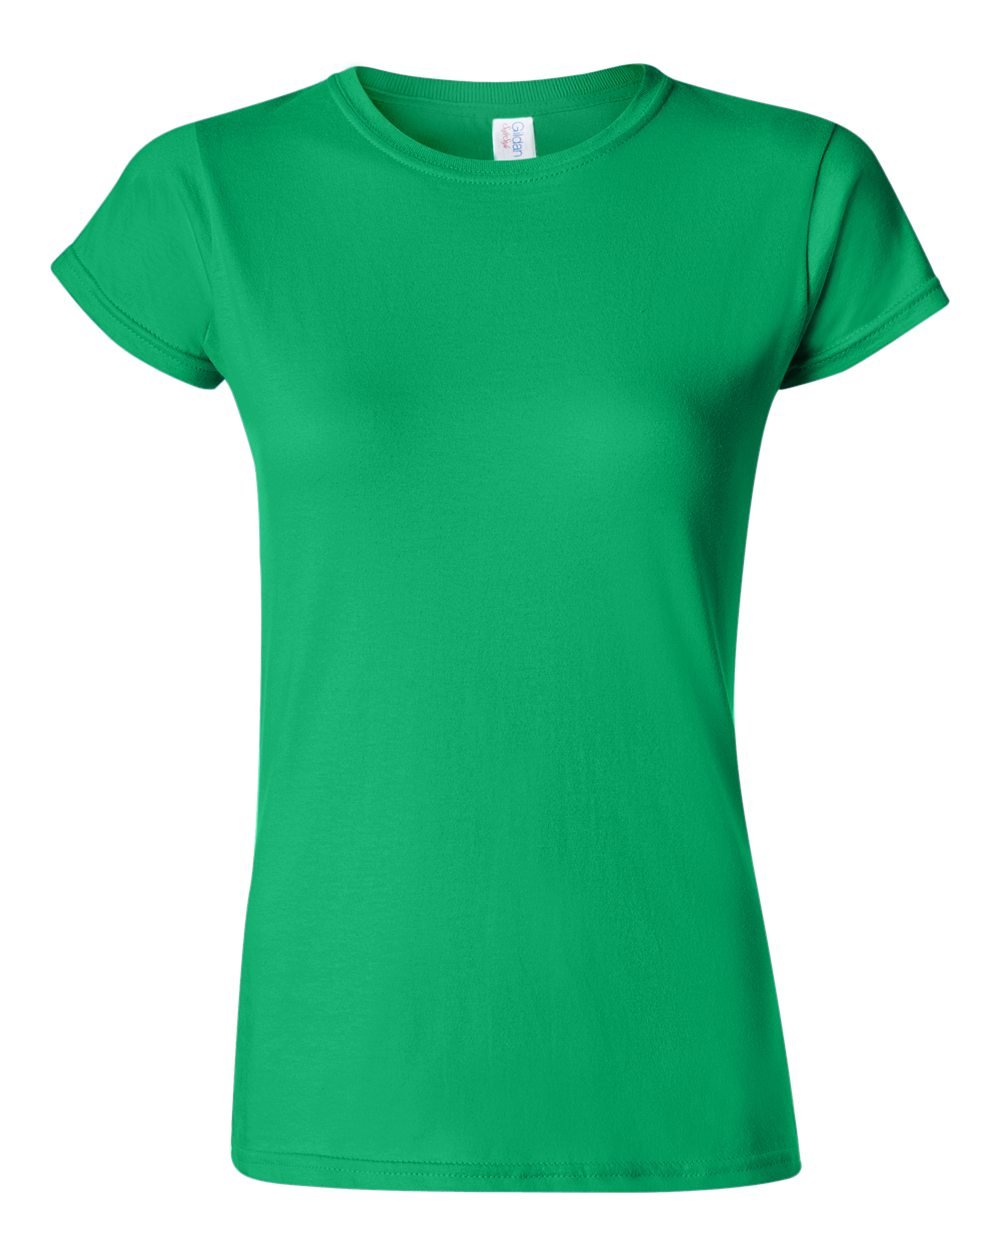 Camiseta Mujer Verde Antioquia algodón peinado | PstyleC